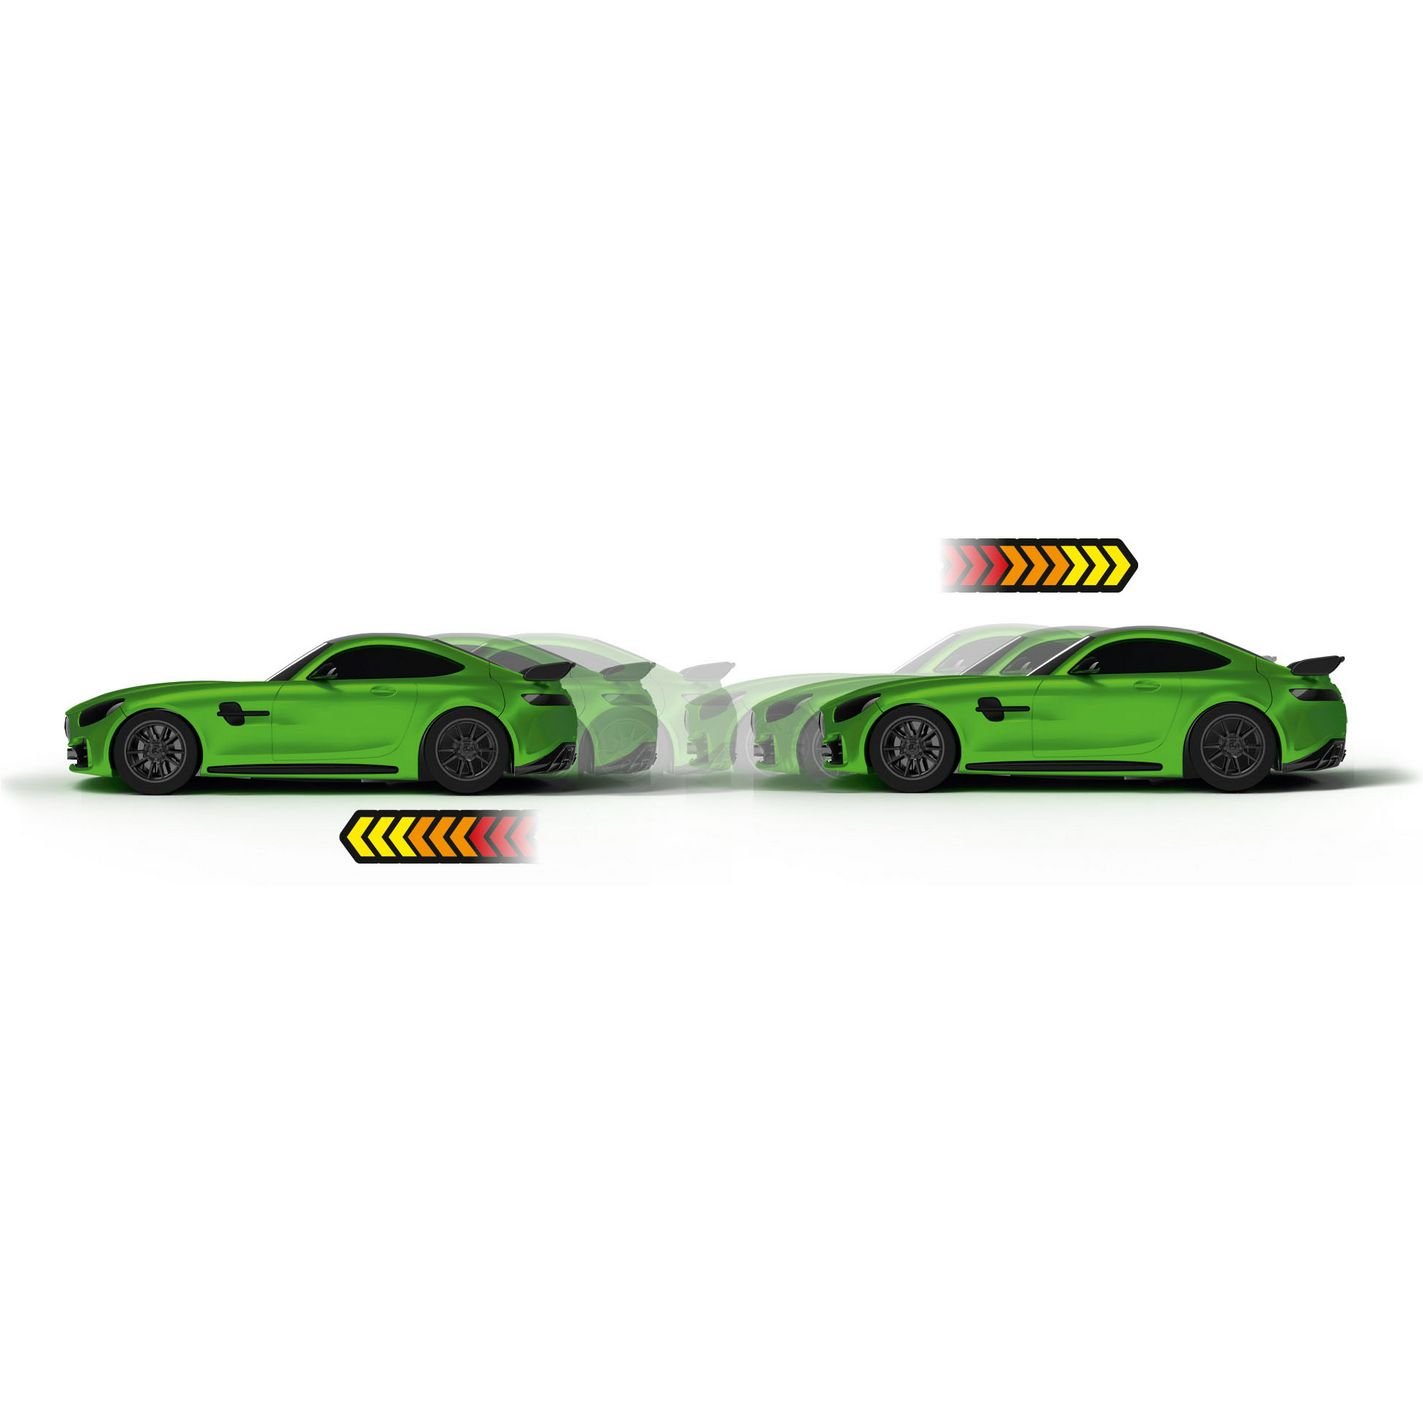 Сборная модель Revell Mercedes-AMG GT R, Green Car, уровень 1, масштаб 1:43, 10 деталей (RVL-23153) - фото 4